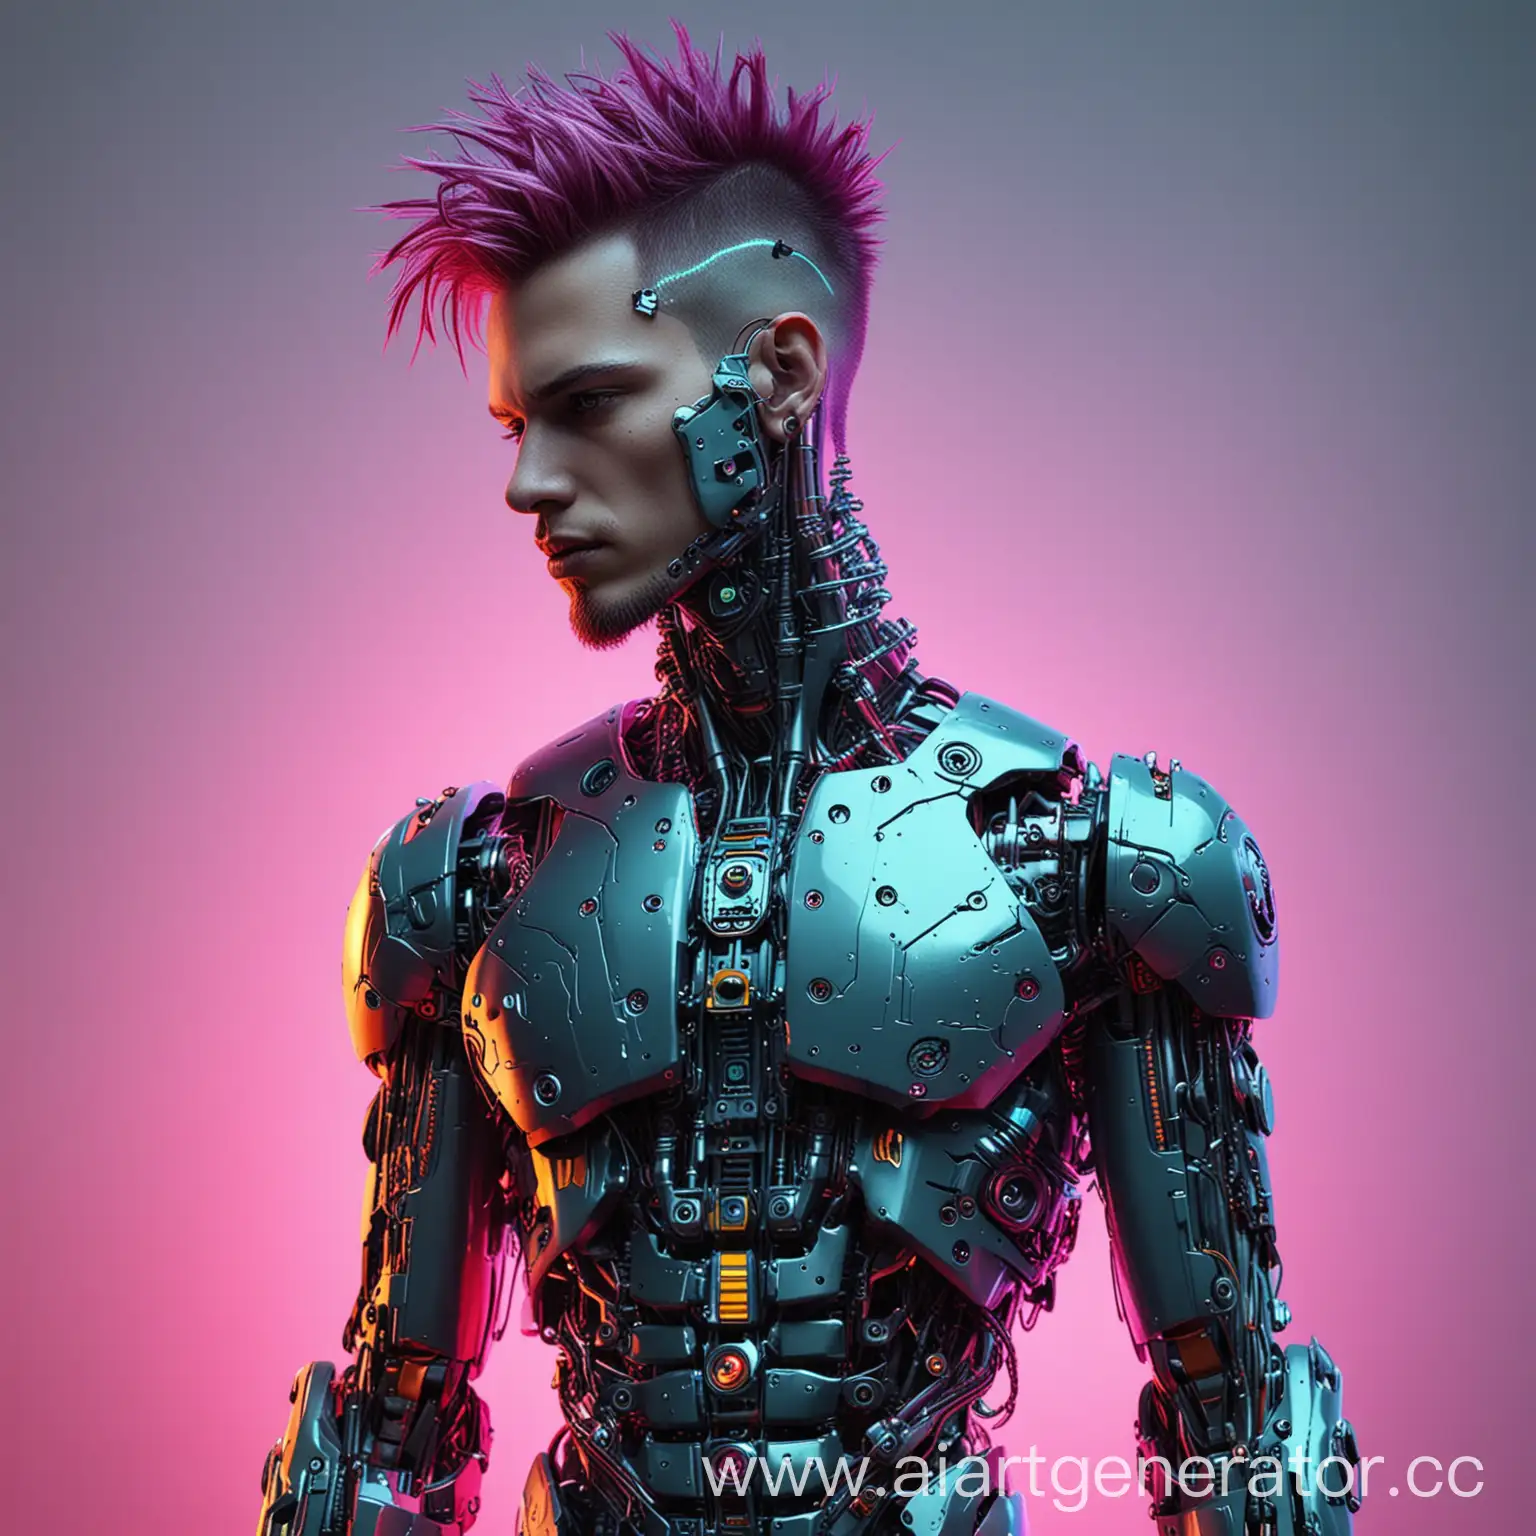 Futuristic-Cyborg-Punk-Man-in-Neon-Colors